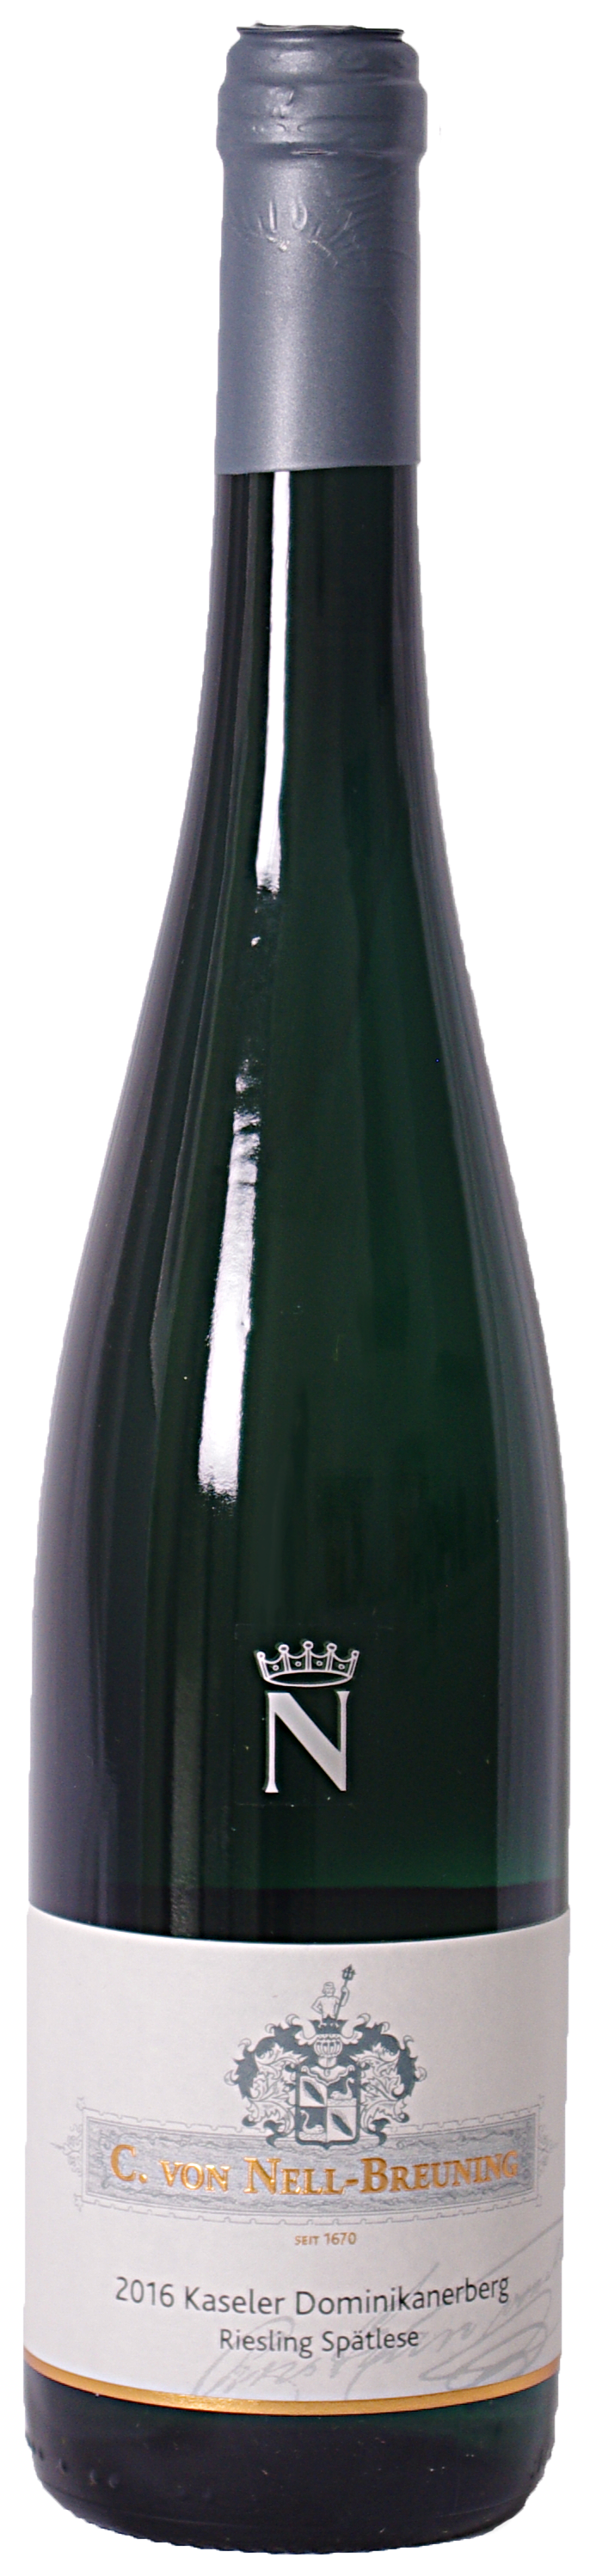 Weingut C. von Nell-Breuning Kaseler Dominikanerberg (Monopole) Riesling Trocken 2016 (Dry Style)